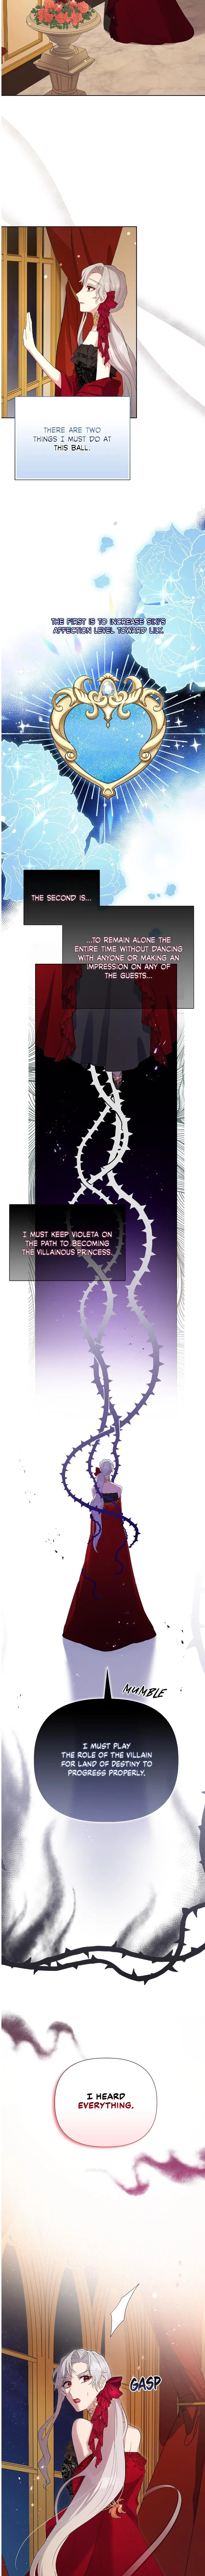 The Villainous Princess Won’t Tolerate a Bad Ending chapter 11